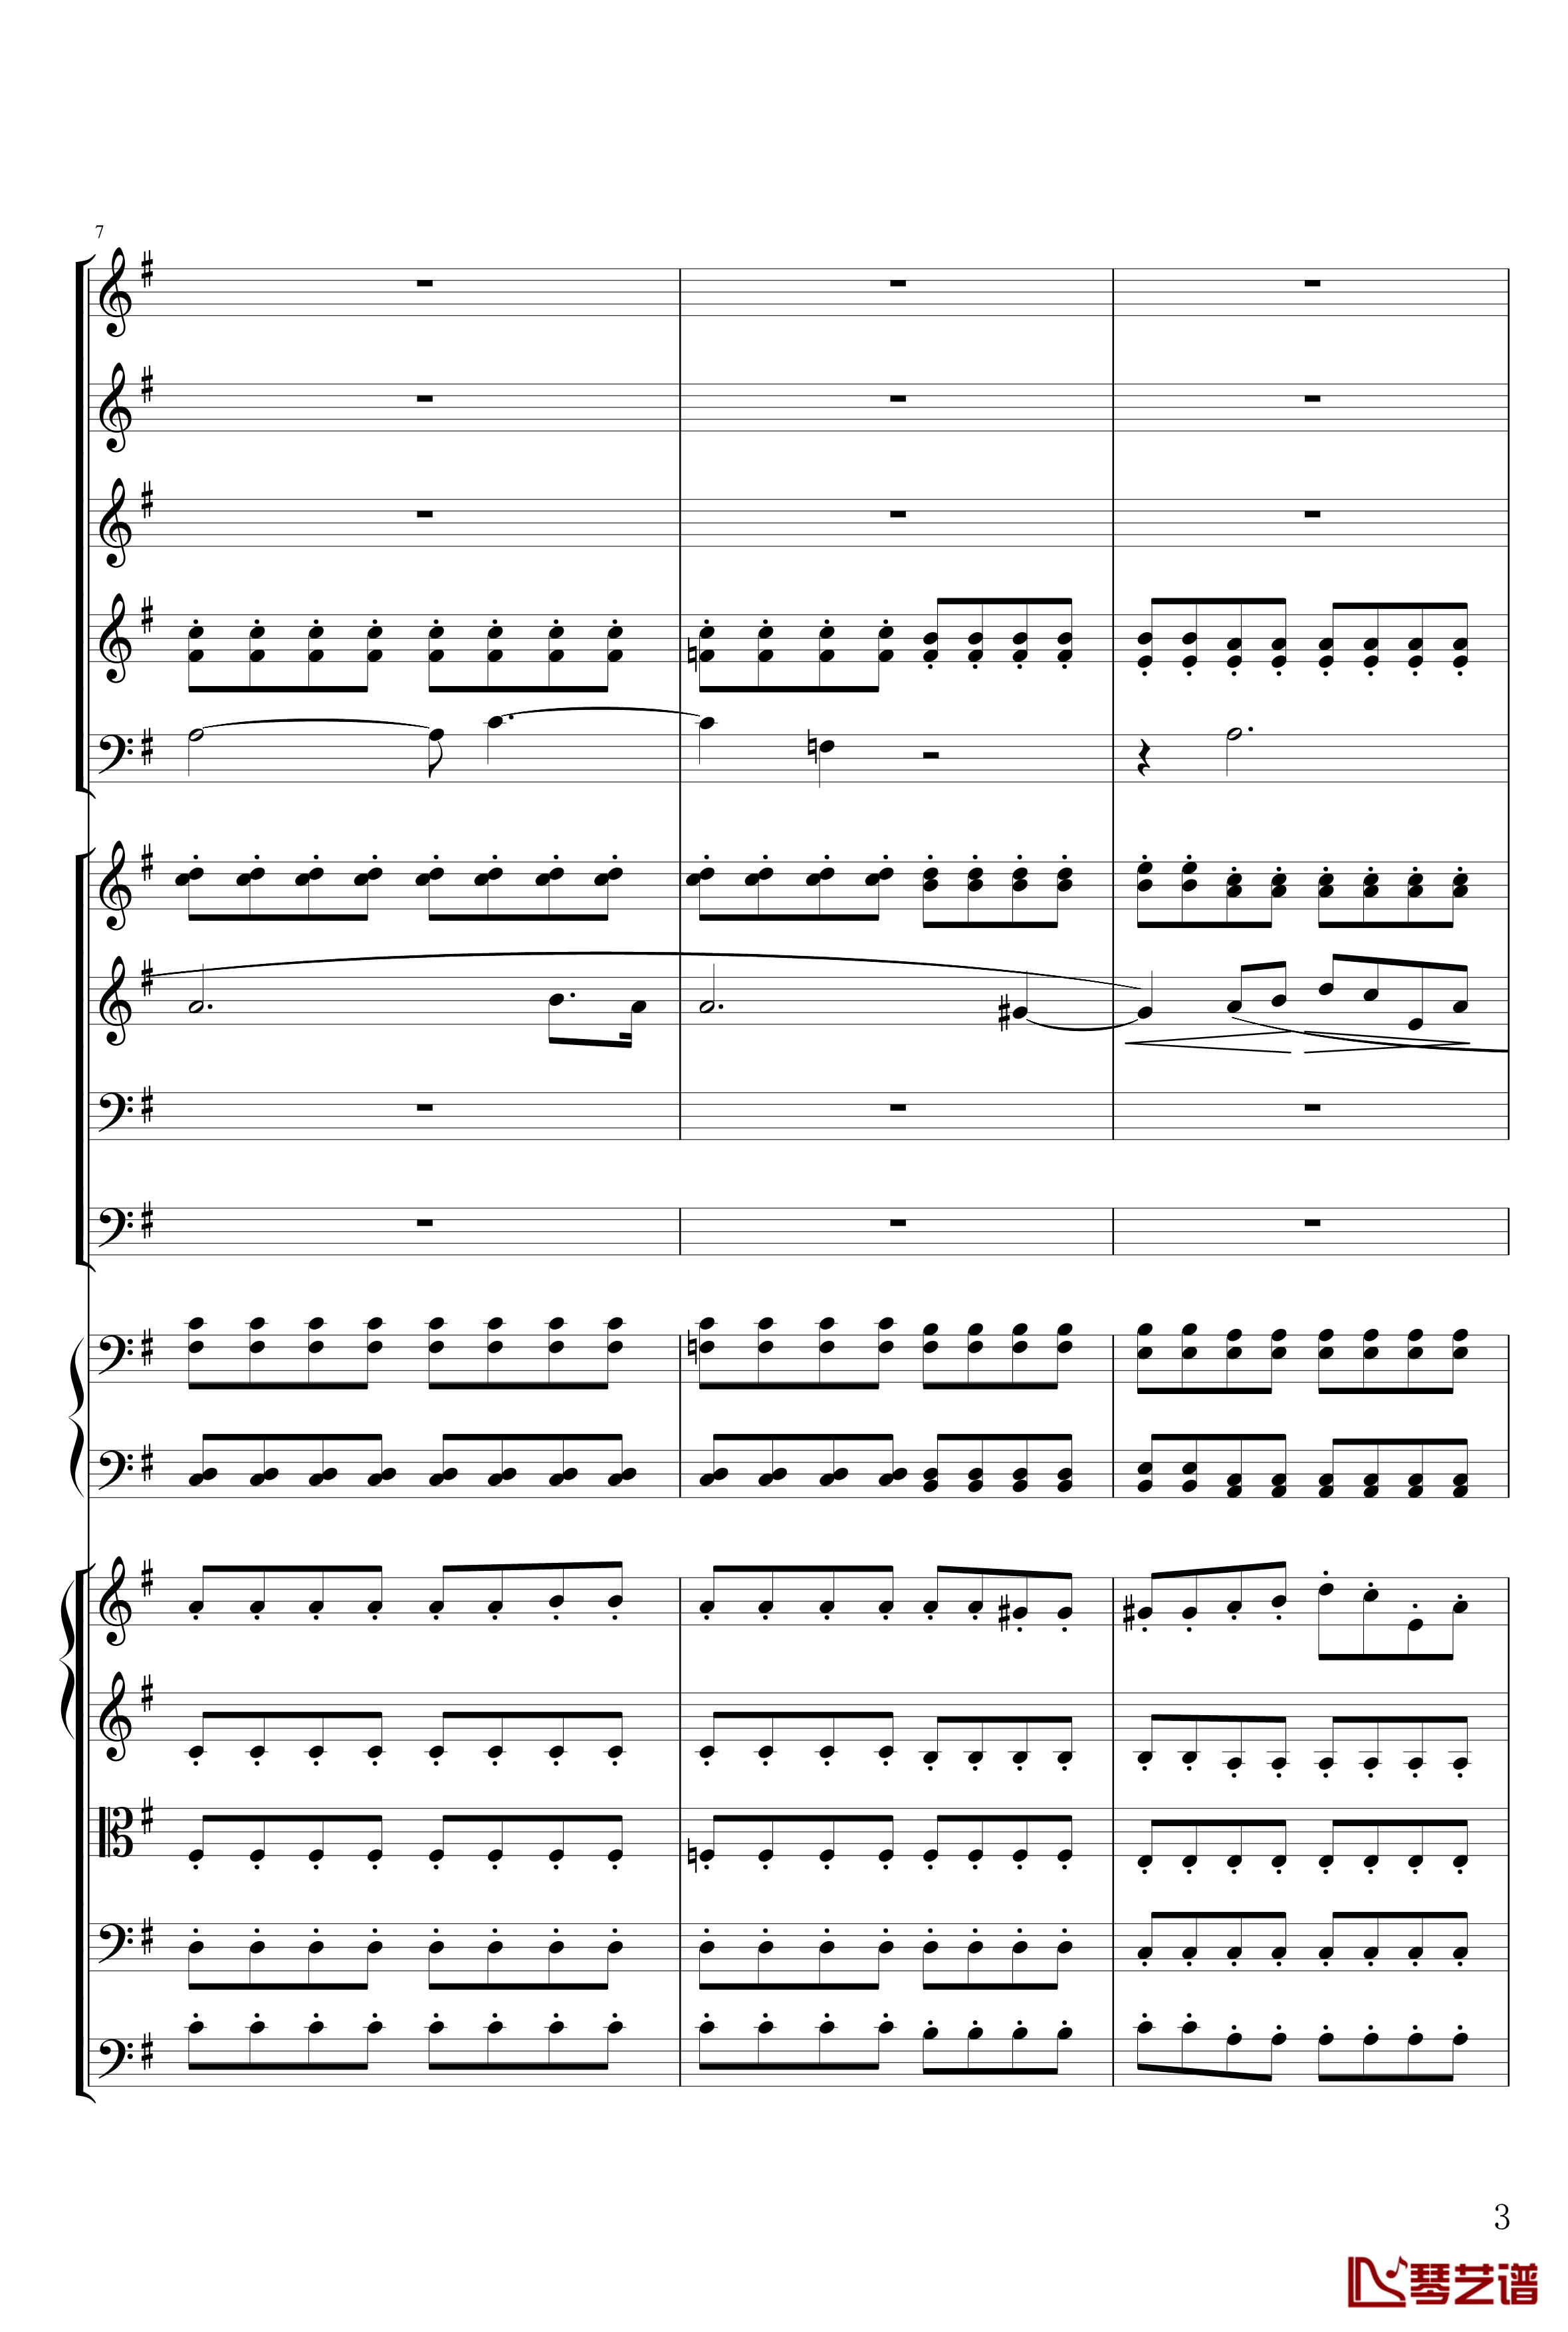 E小调前奏曲钢琴谱-交响乐版-肖邦-chopin3